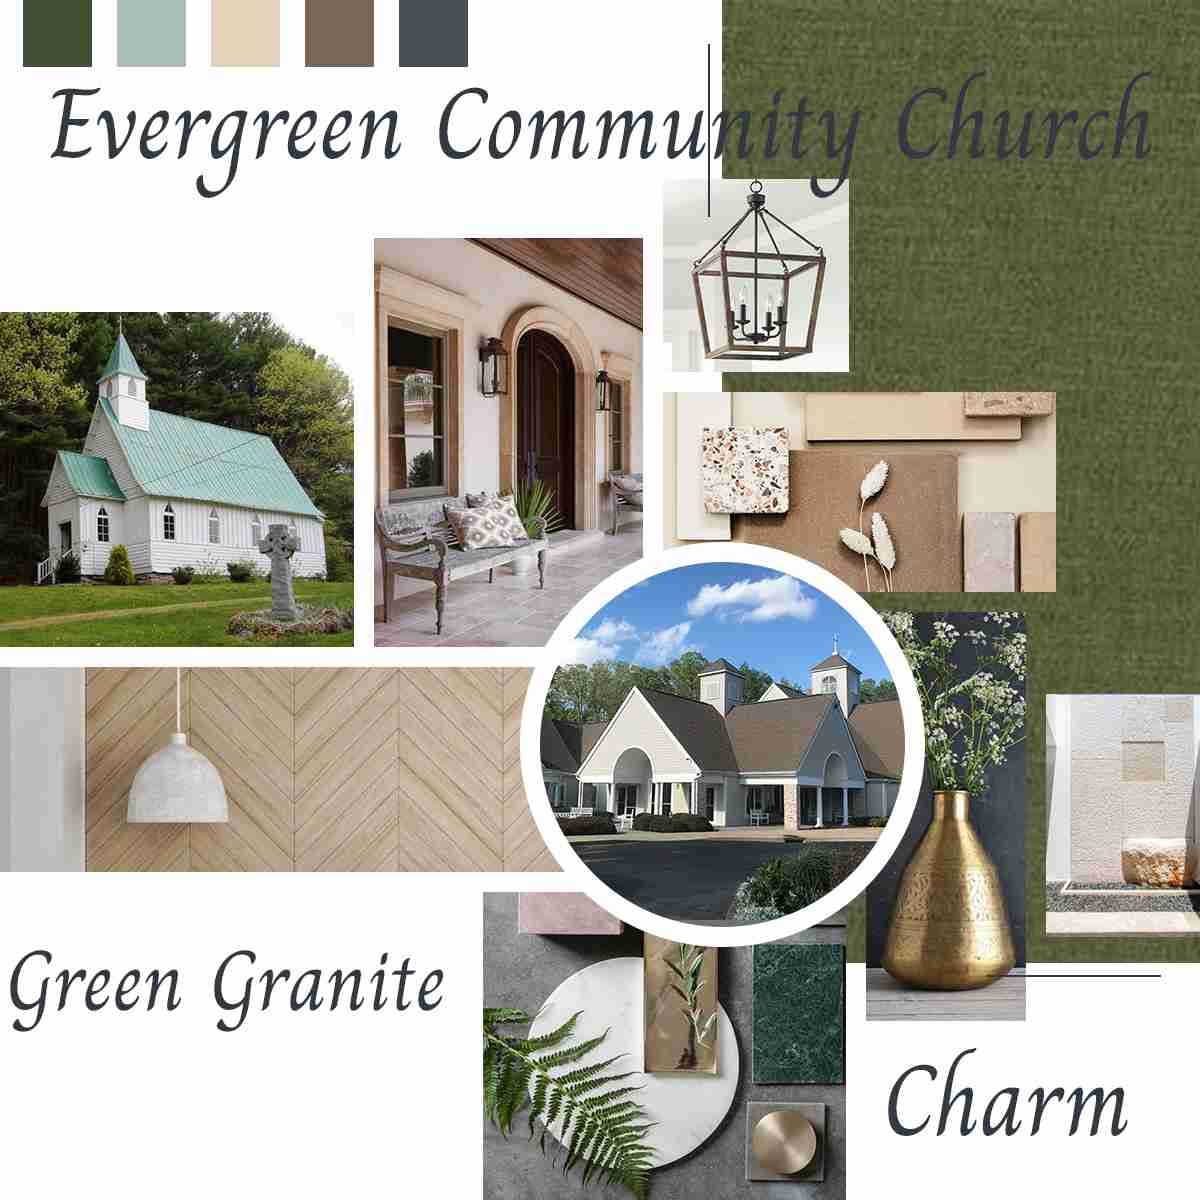 Evergreen Community Church Green Granite moodboard design